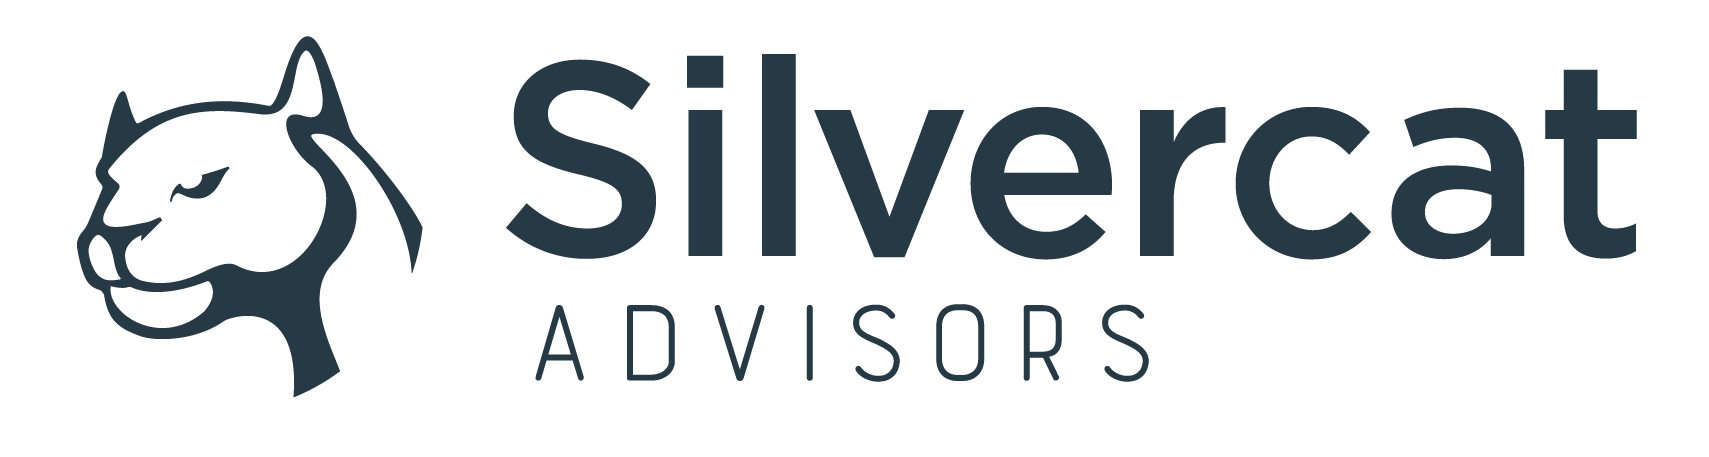 Silvercat Advisors